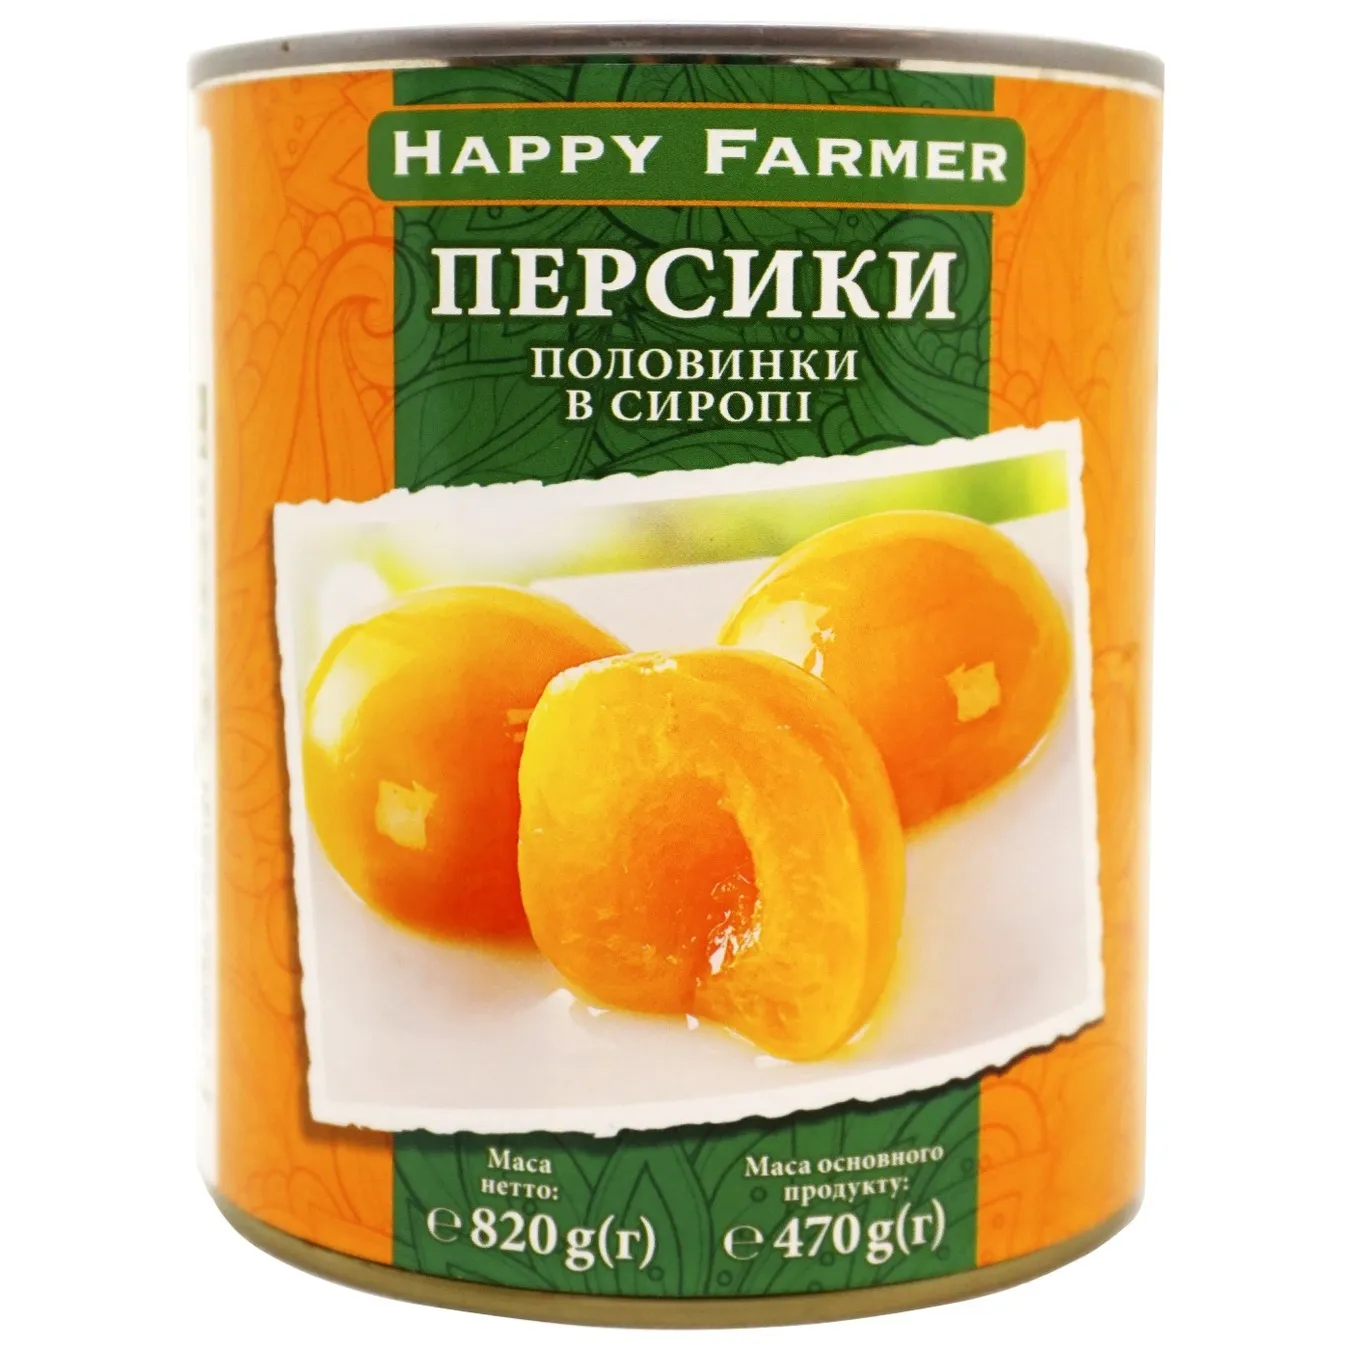 HappyFarmer peach halves in syrup 850g